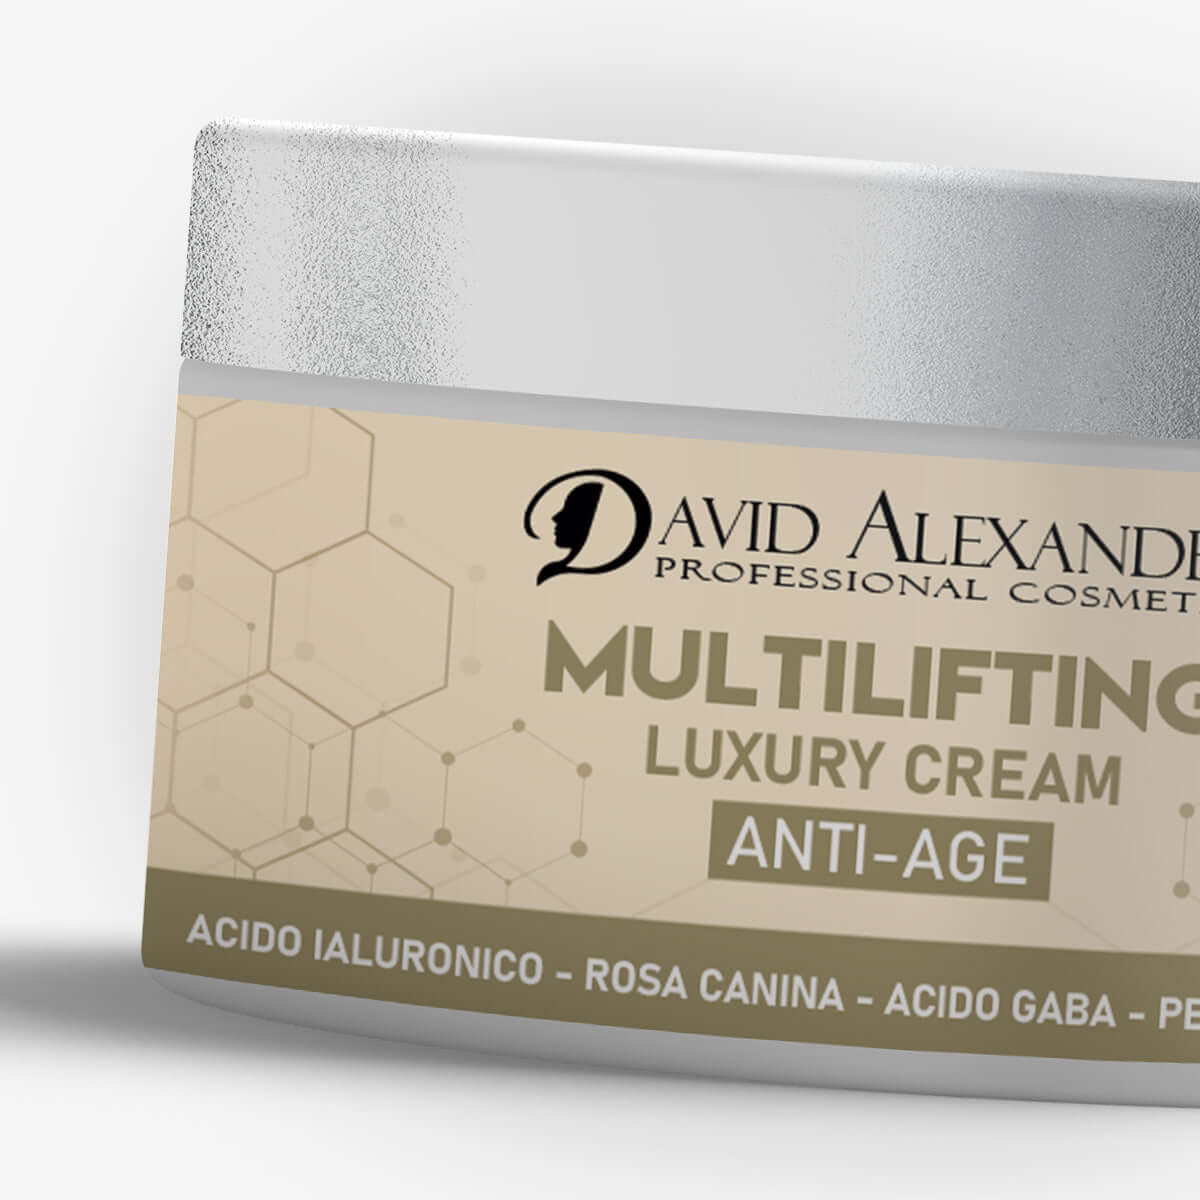 MULTILIFTING LUXURY CREAM - david alexander professional cosmetics